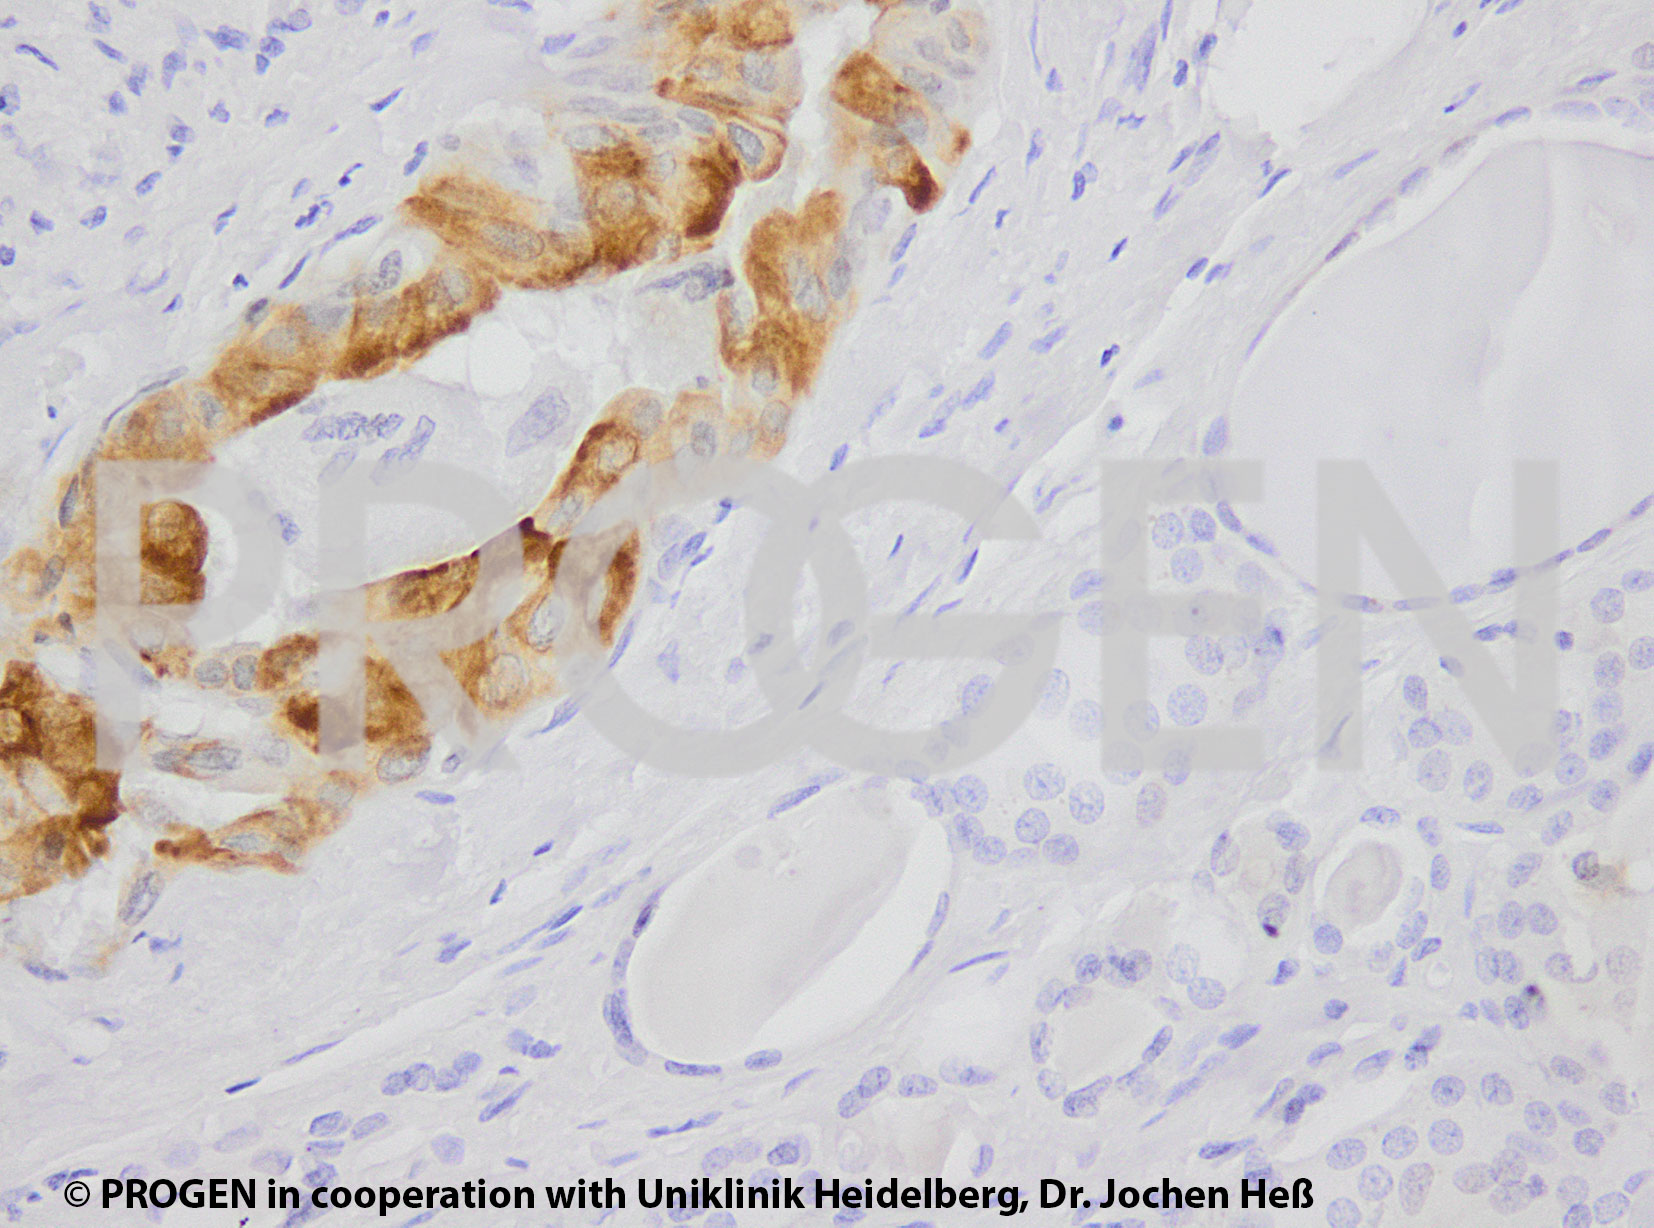 anti-Keratin K7 mouse monoclonal, Ks7.18, lyophilized, purified